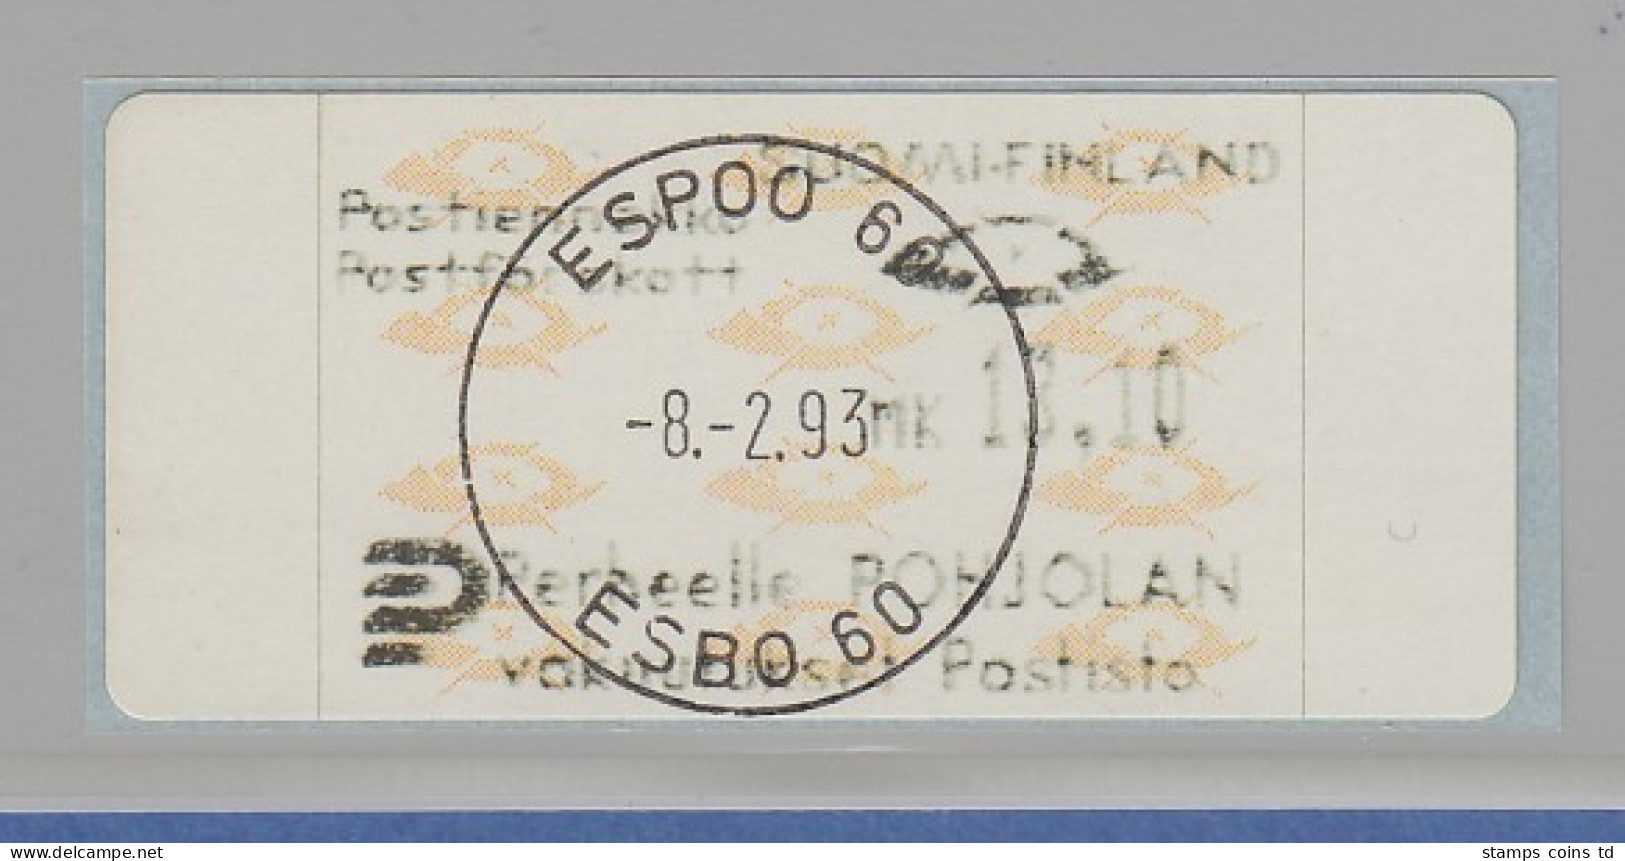 Finnland 1993 Dassault-ATM Mi.-Nr. 12.3 Z5 Gestempelt ESPOO 8.2.93. - Automaatzegels [ATM]